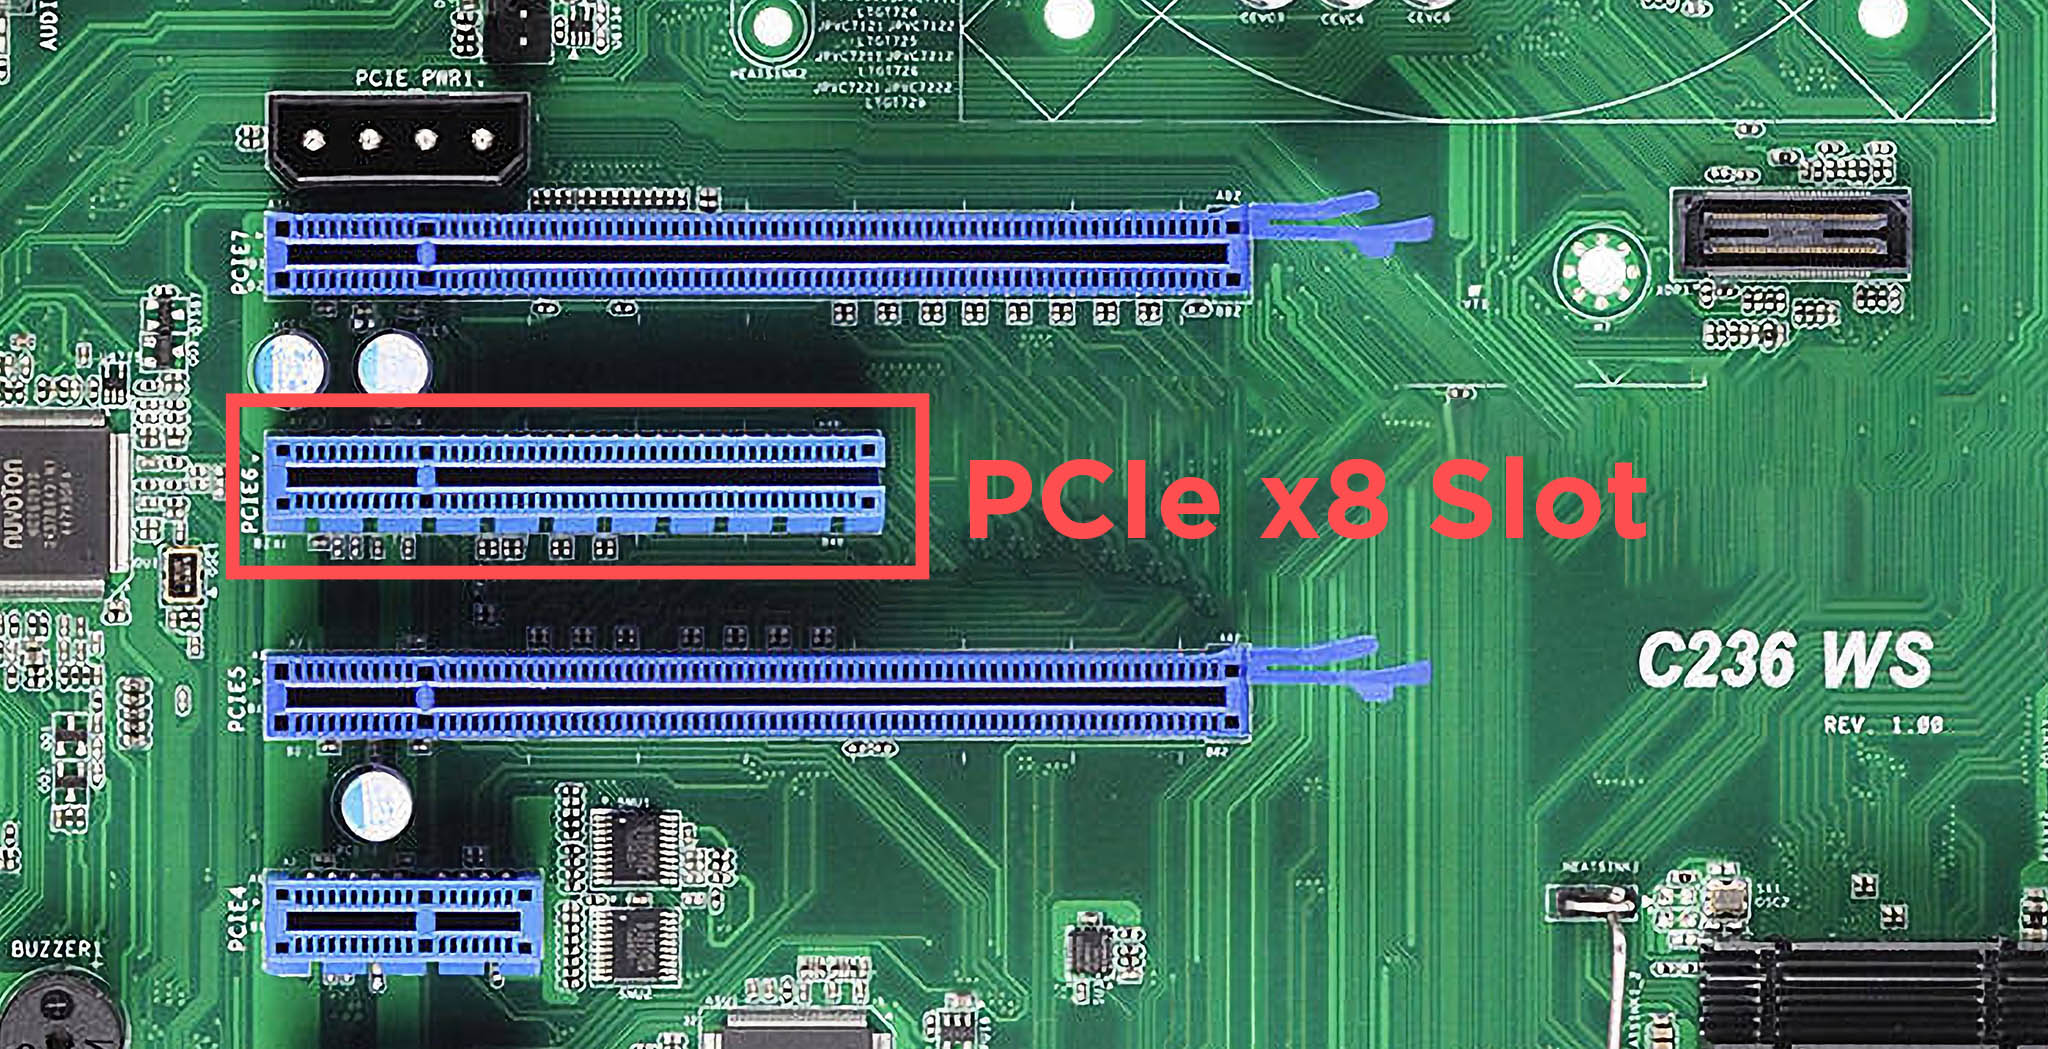 PCIe x8 Slot